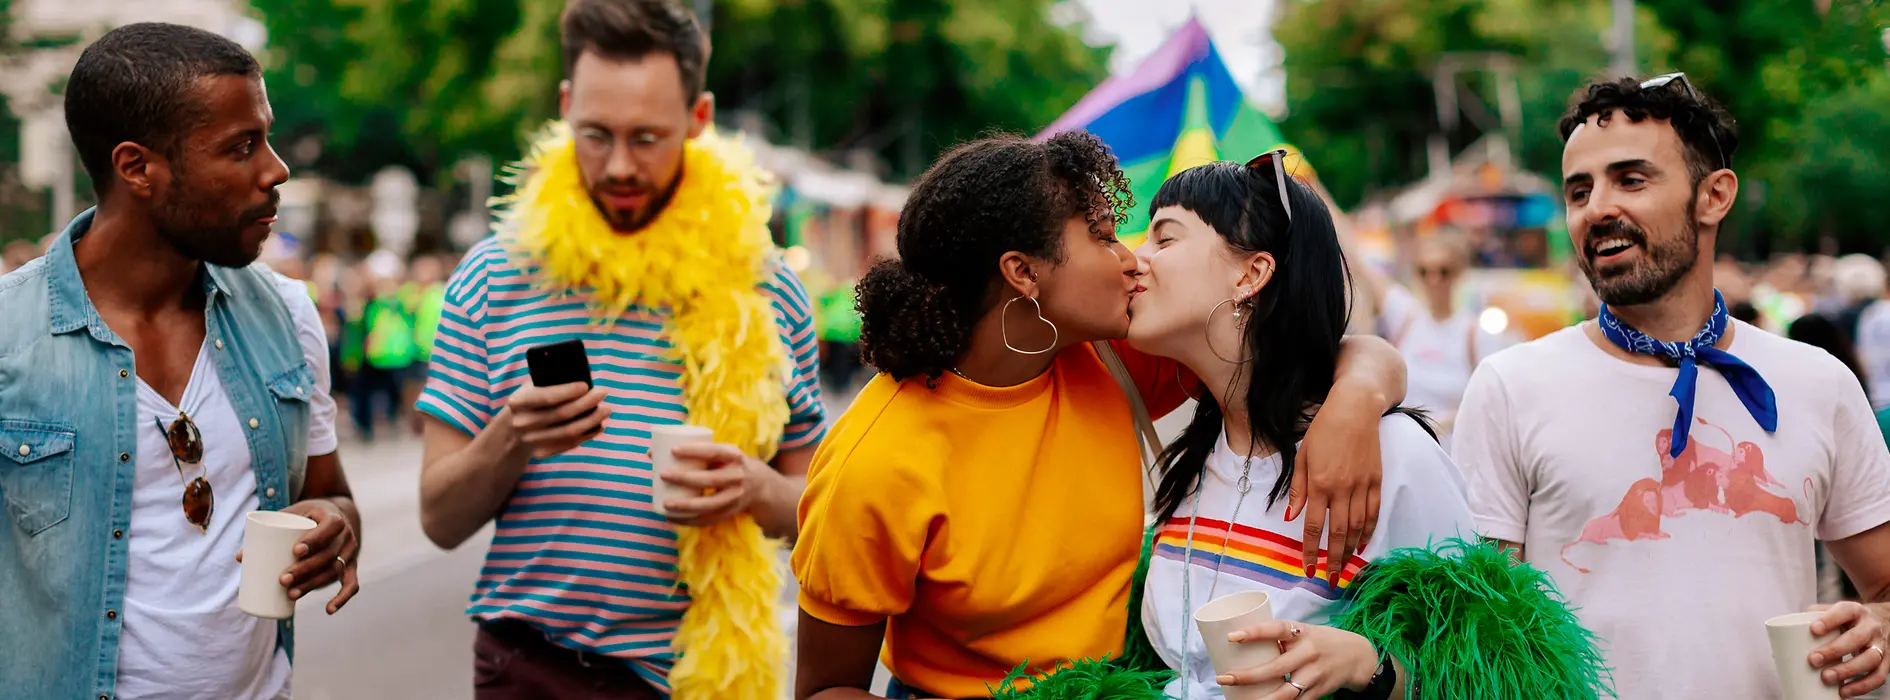 Amici gay e lesbo alla Rainbow Parade